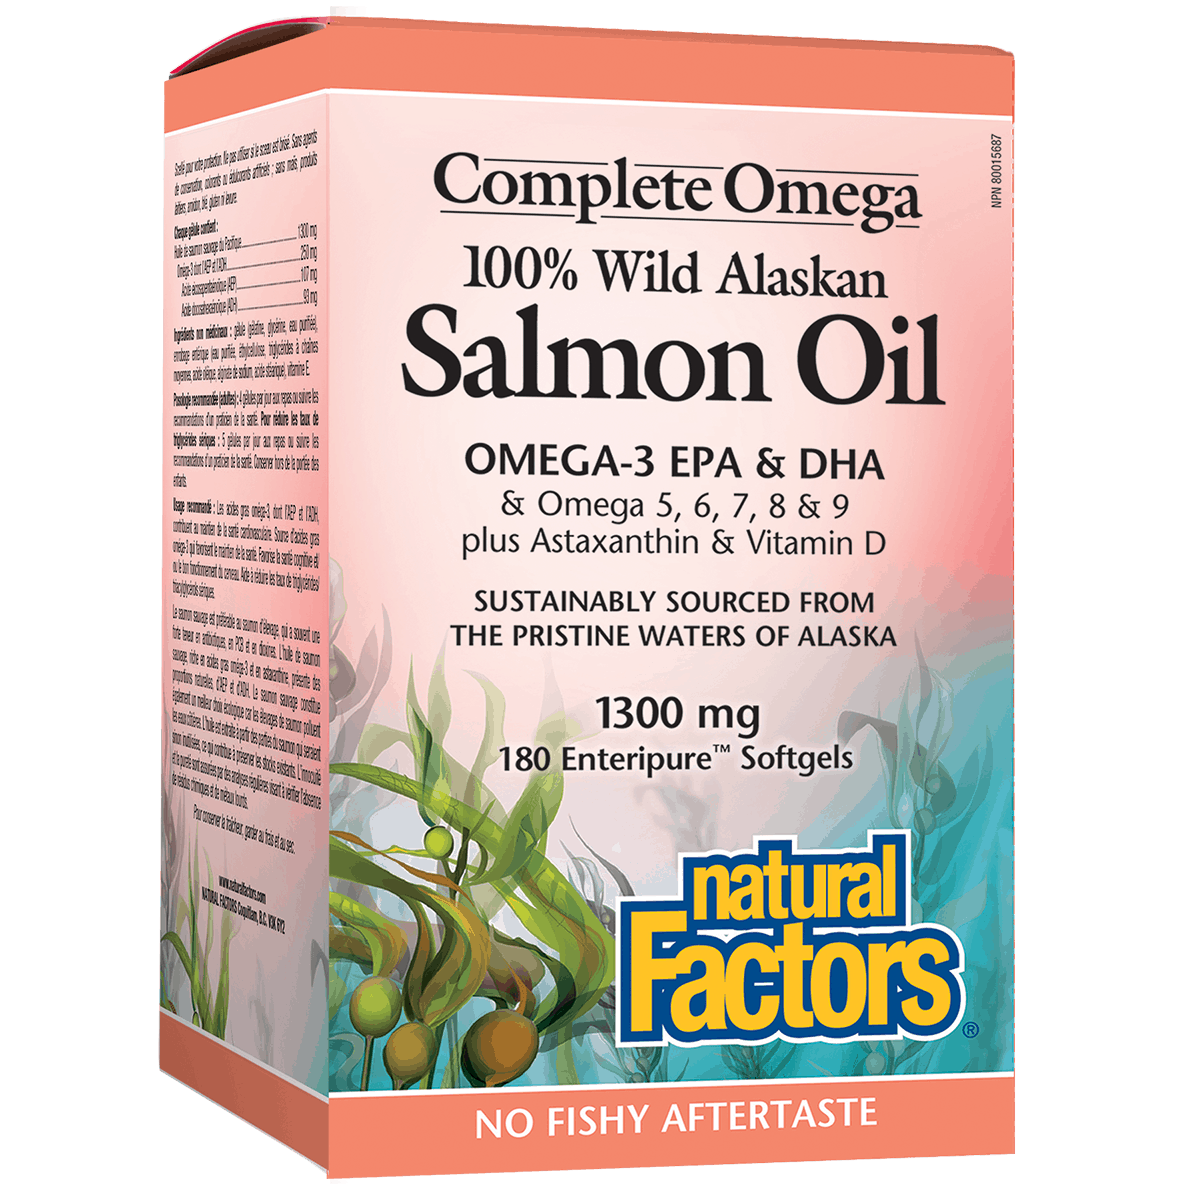 100% Wild Alaskan Salmon Oil 1300 mg, Complete Omega 220 EP Softgels